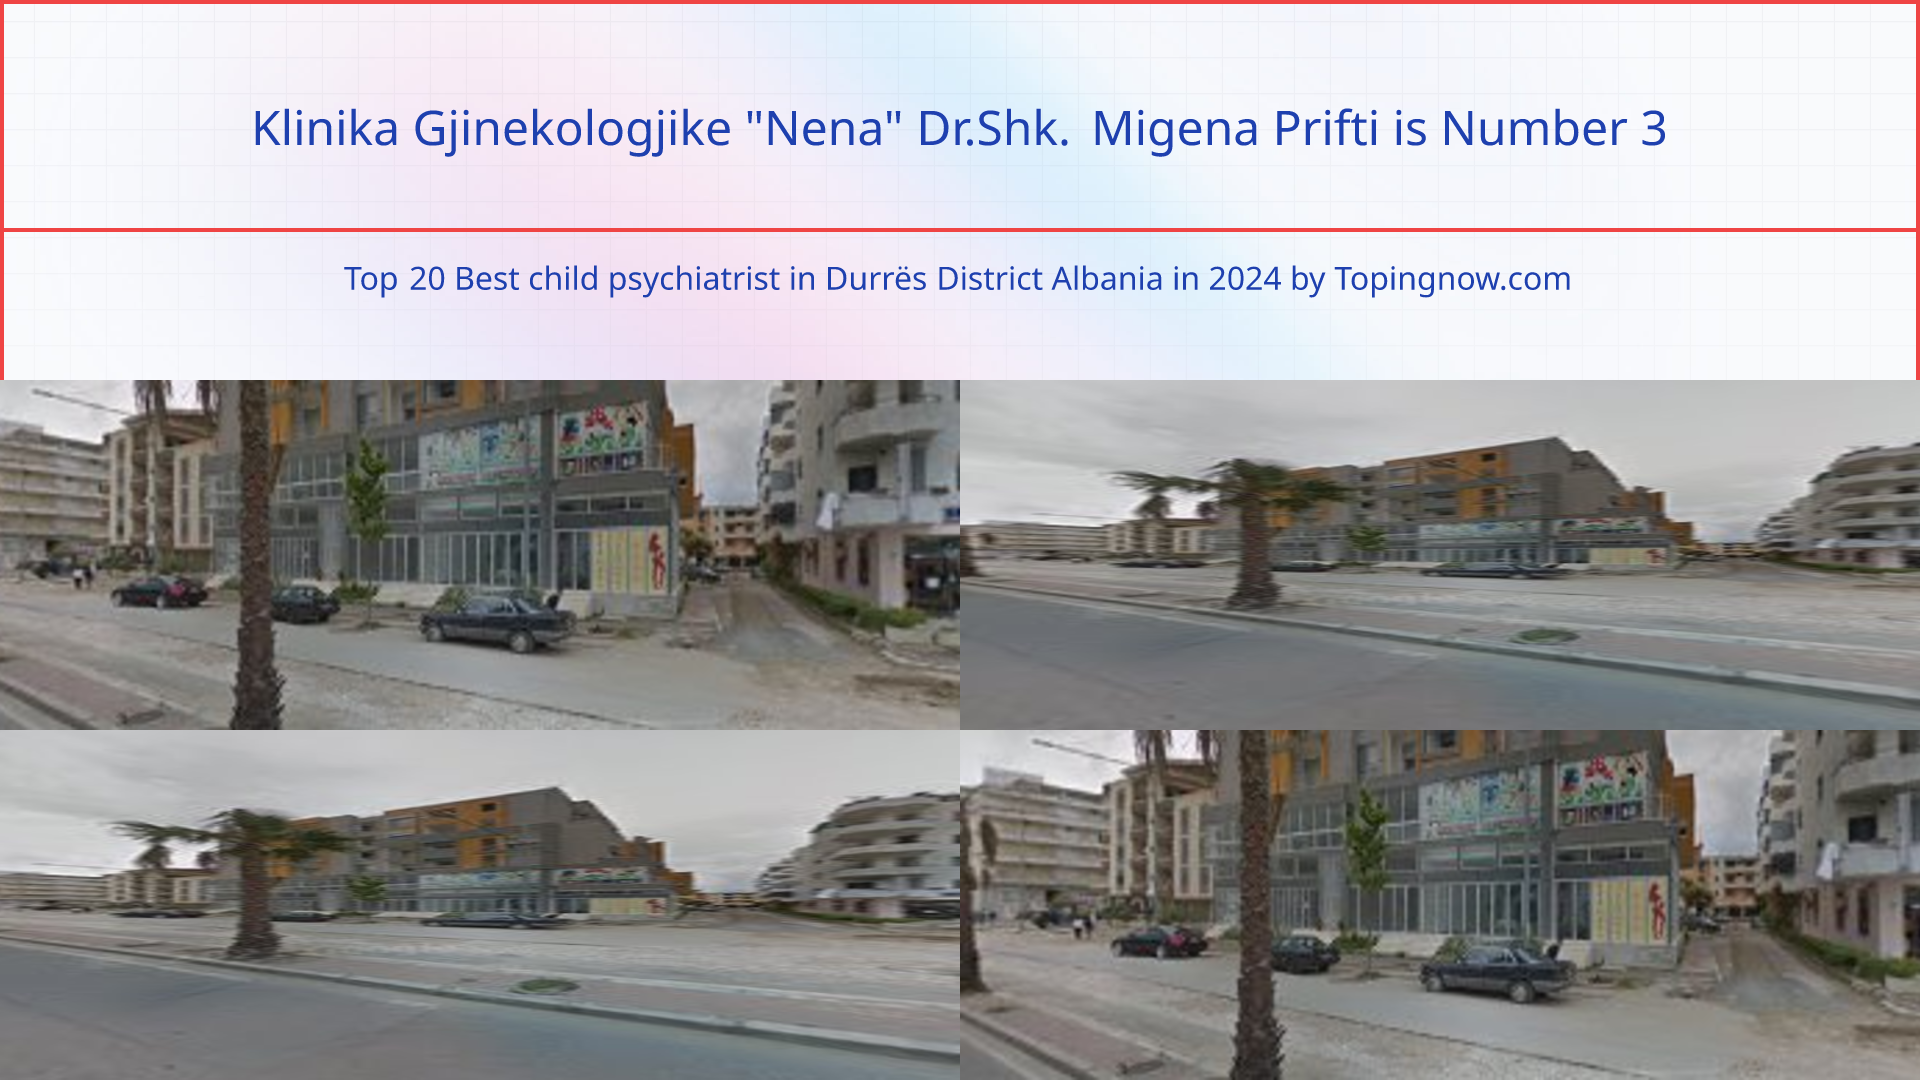 Klinika Gjinekologjike "Nena" Dr.Shk. Migena Prifti: Top 20 Best child psychiatrist in Durrës District Albania in 2024